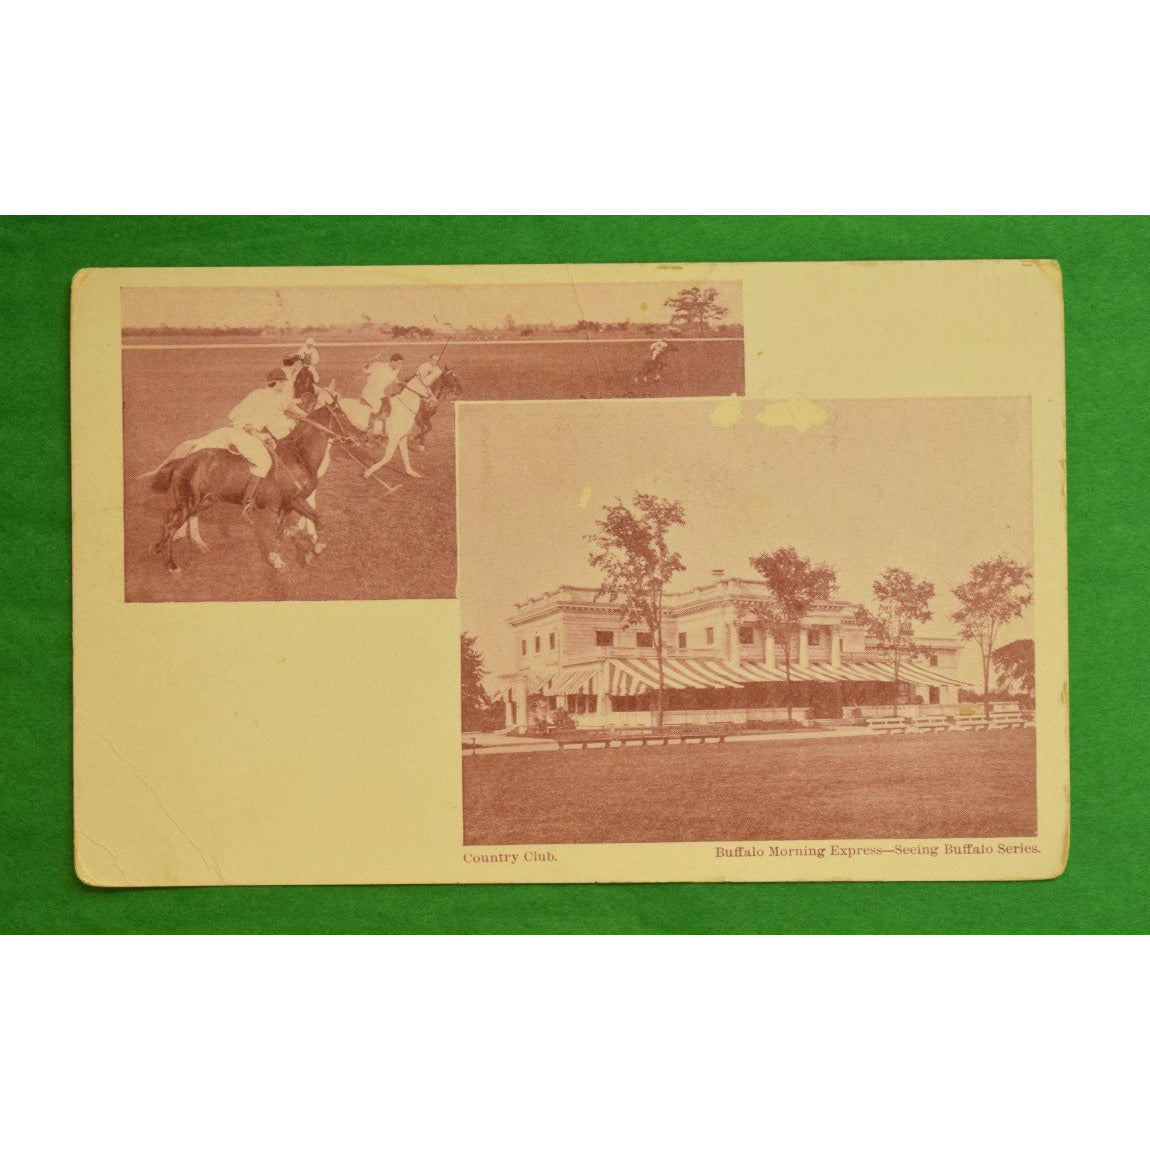 Buffalo Morning Express Country Club Postcard w/ Polo Players